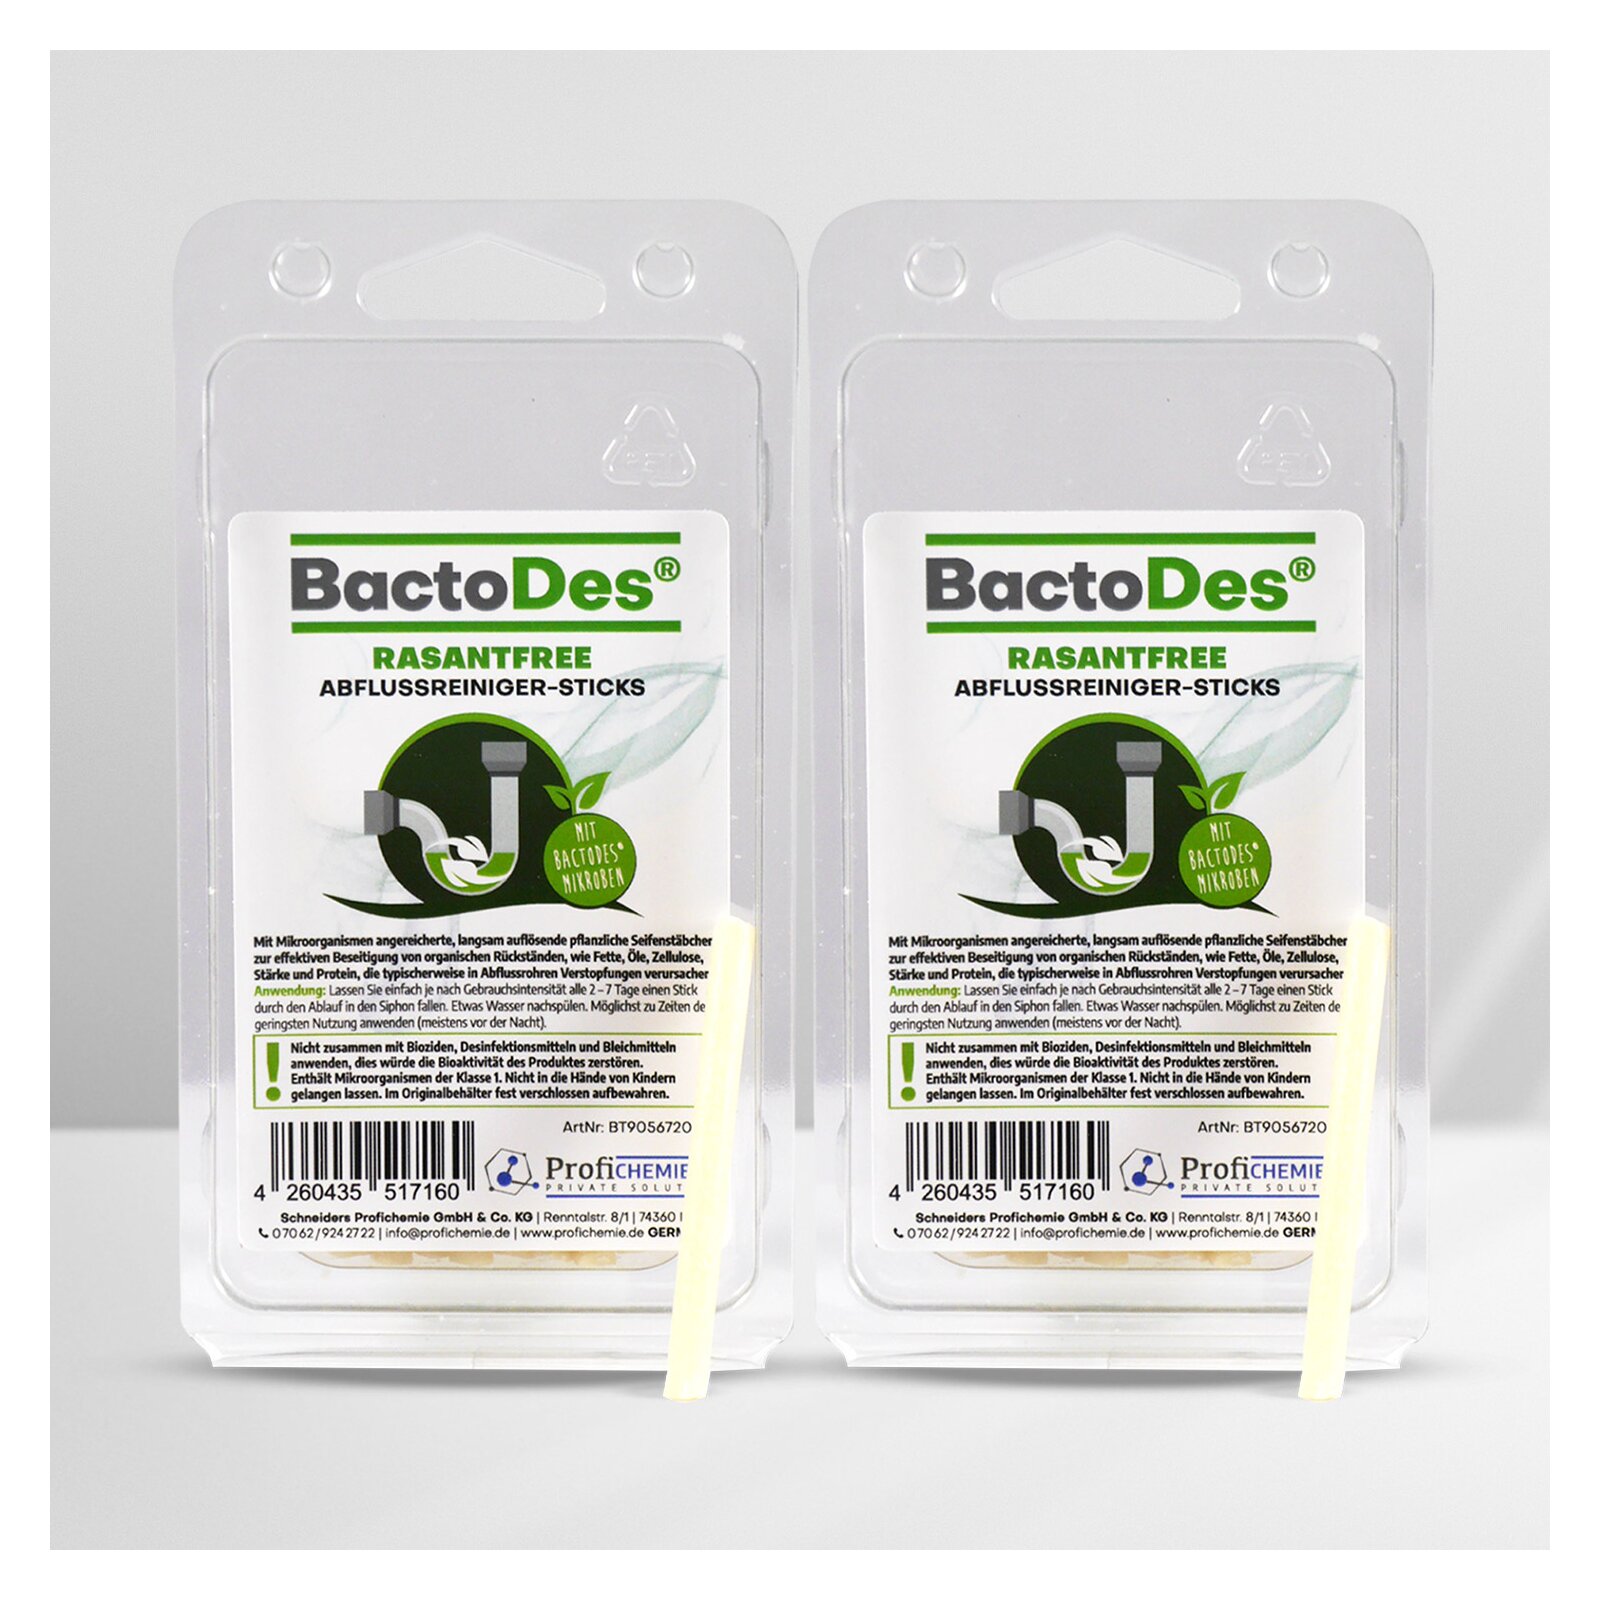 BactoDes(R) RasantFree AbflussreinigerSTICKS 2 Pack 20 SticksPack